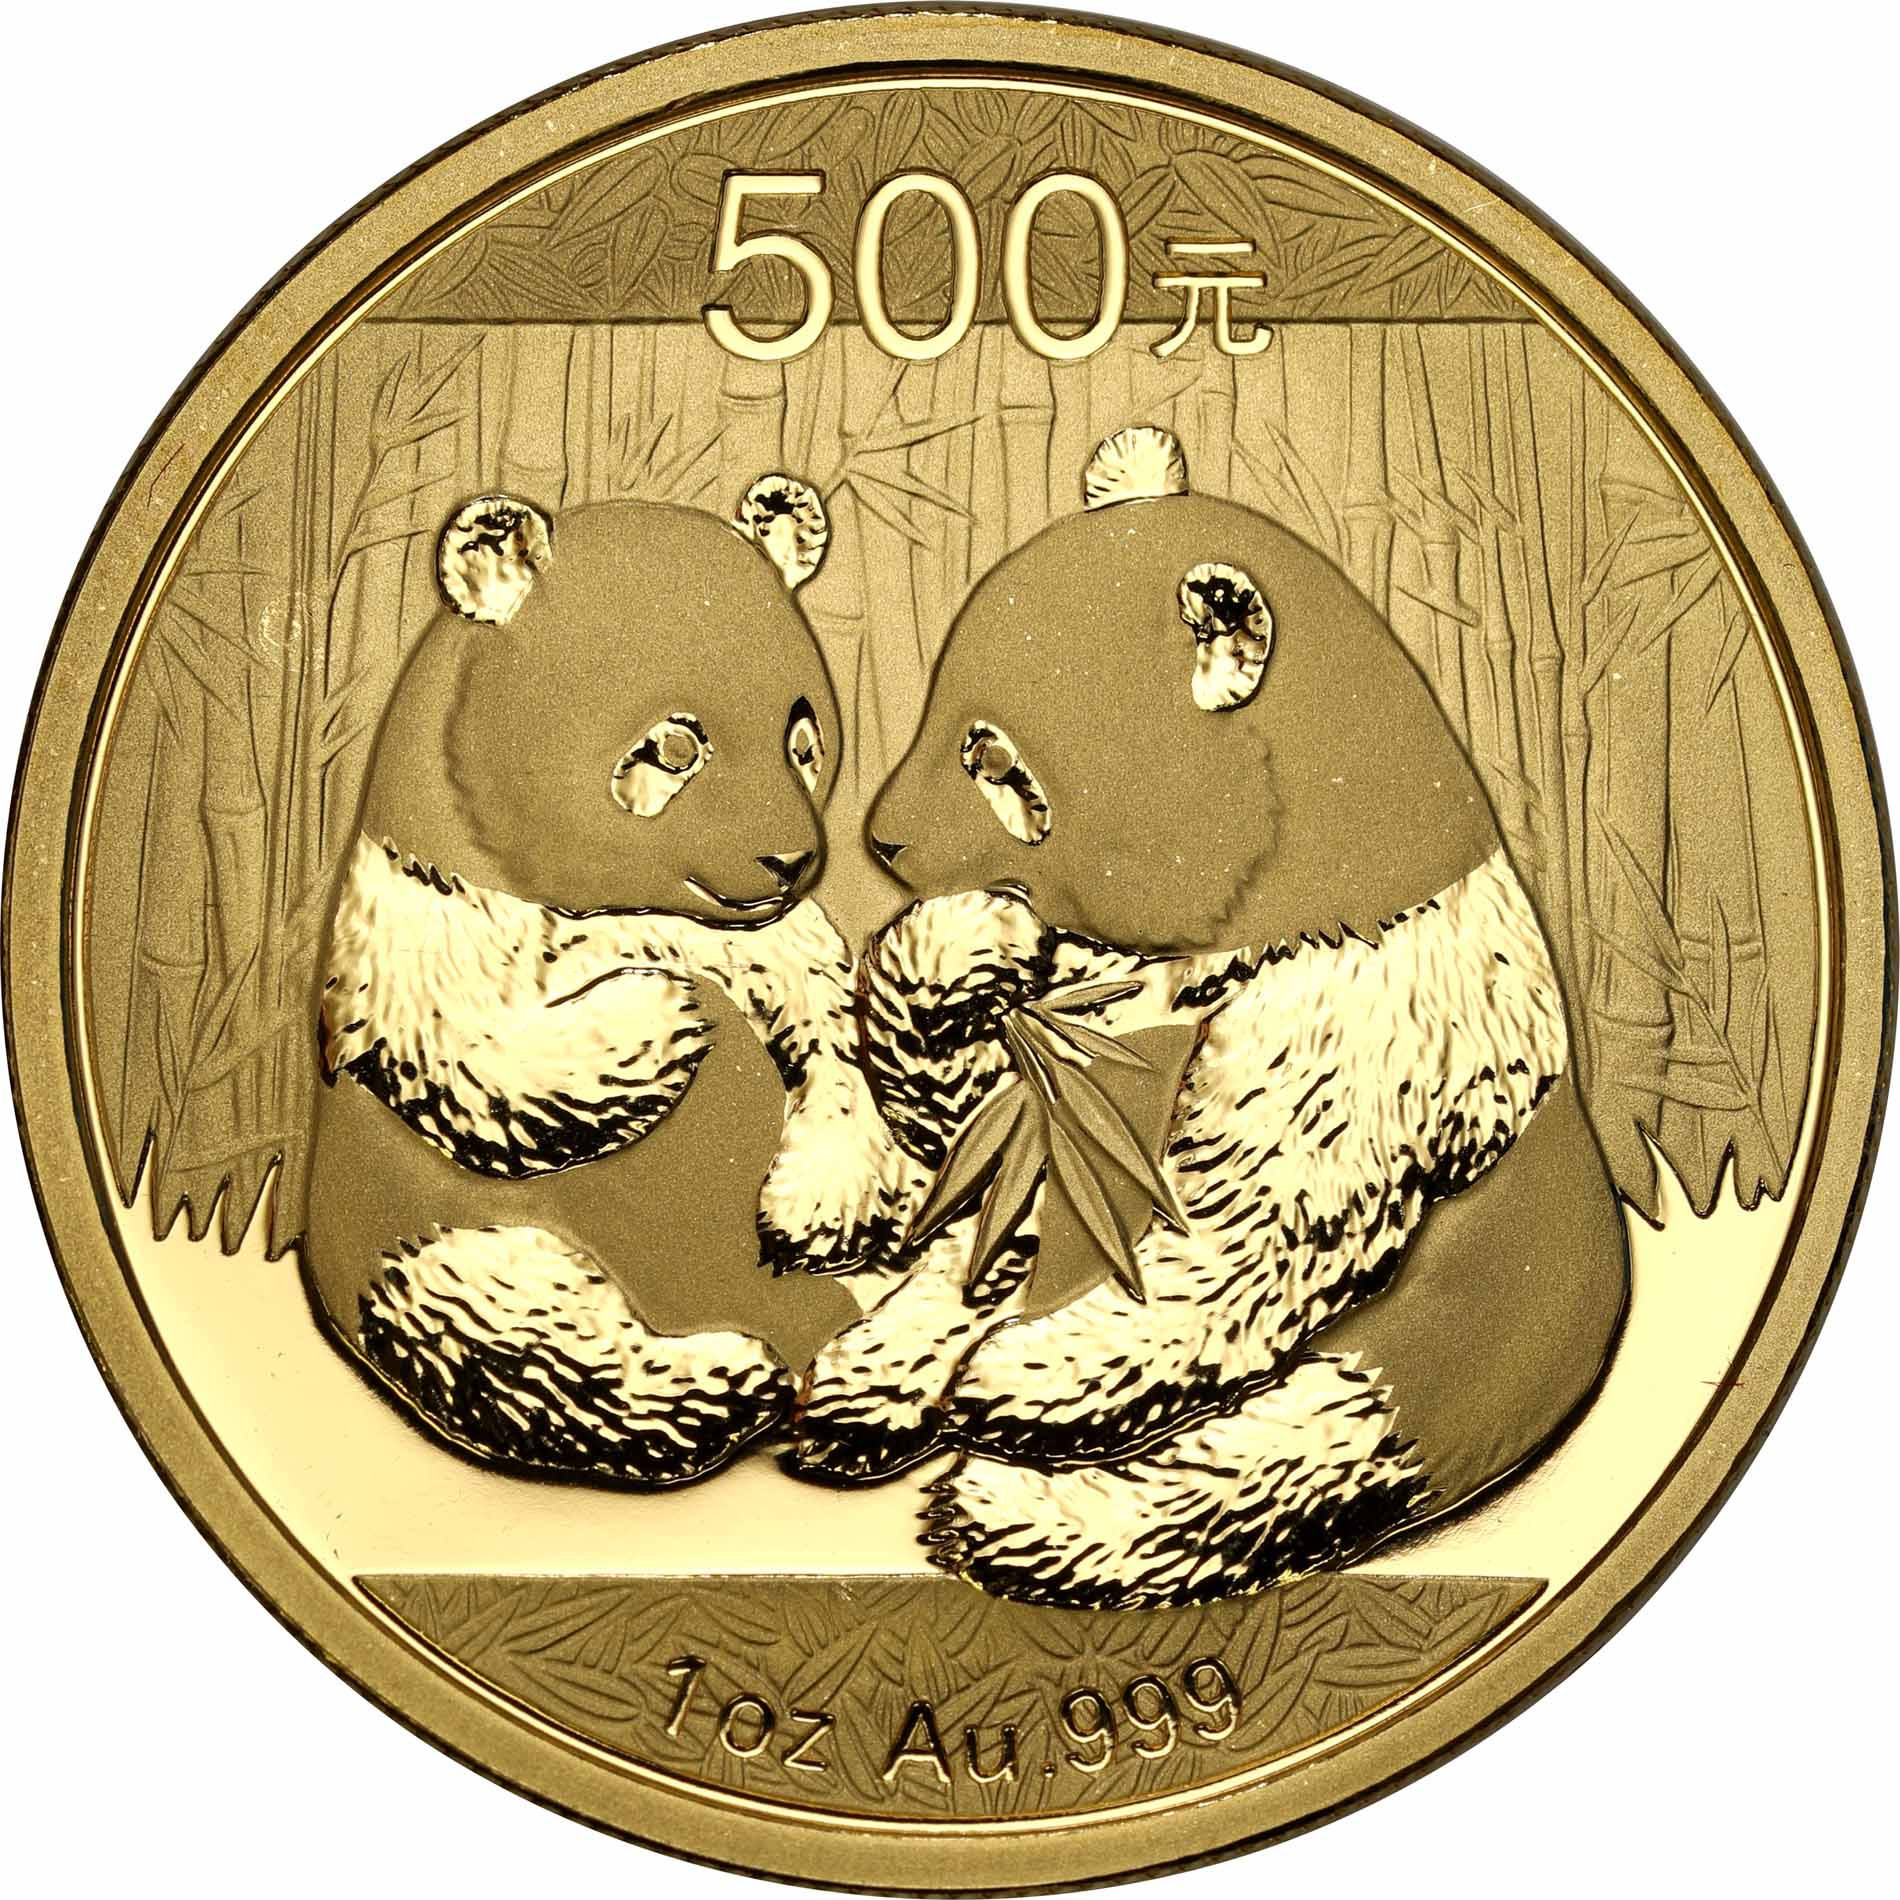 Chiny 500 Yuan (juanów) 2009 Panda Wielka 1 UNCJA złota